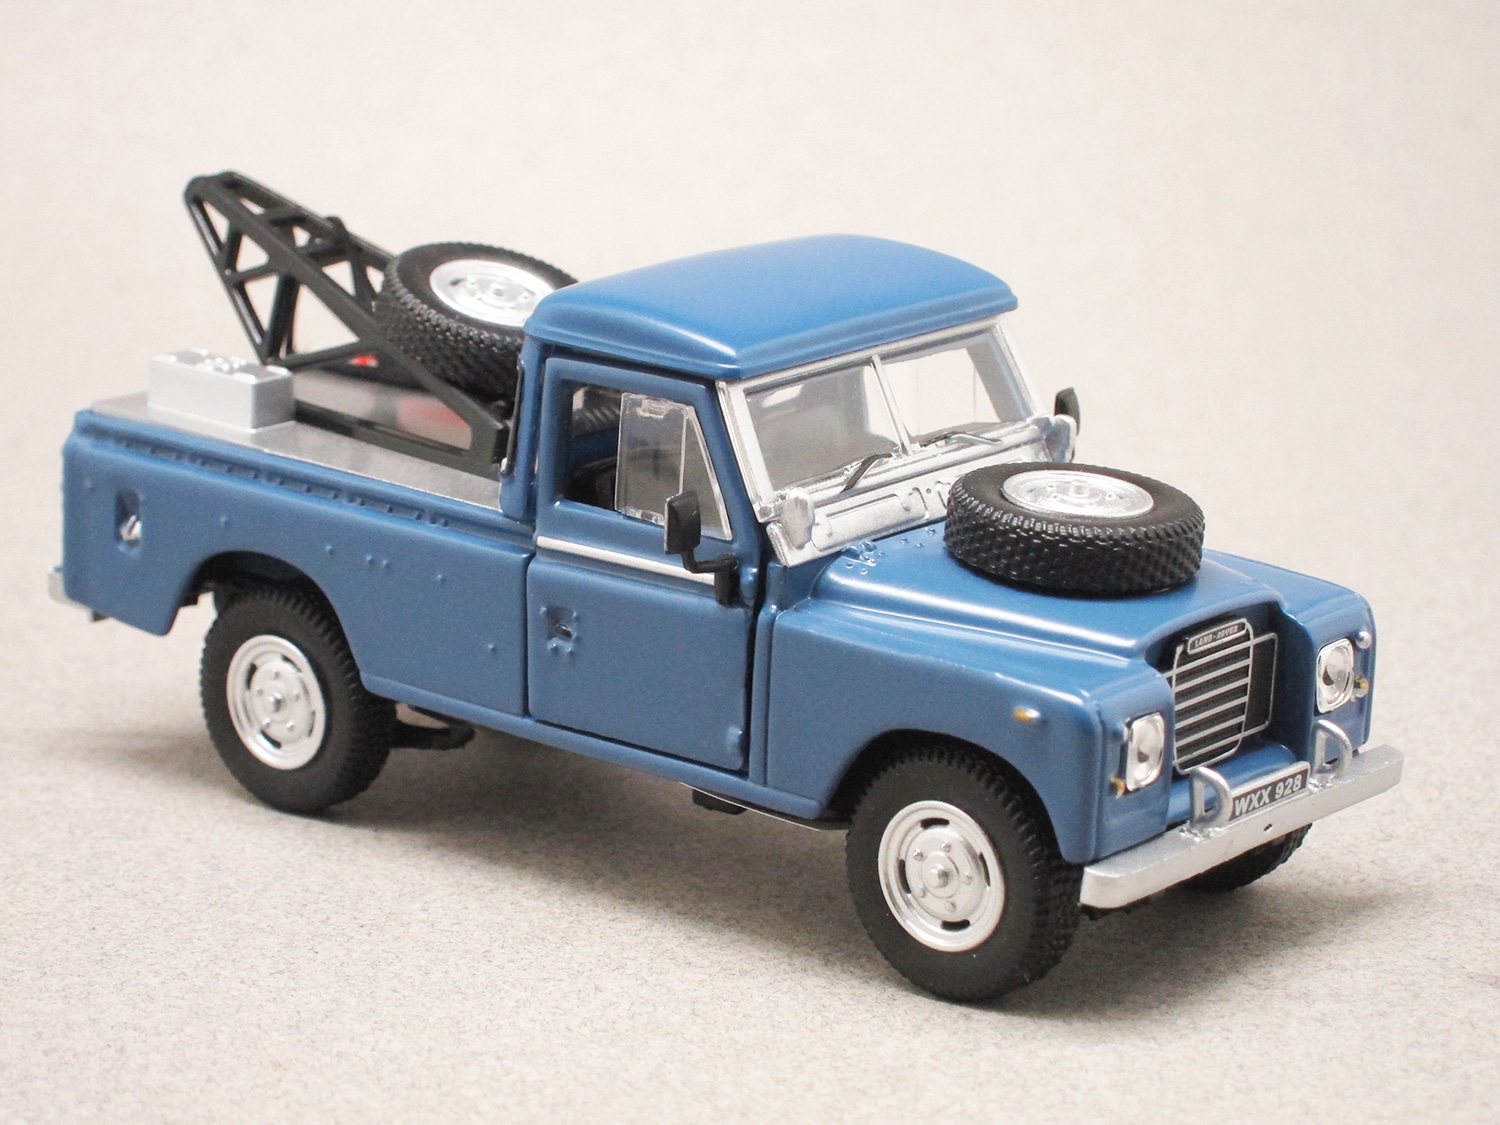 Land Rover Série 3 pick-up bleu (Oliex) 1/43e